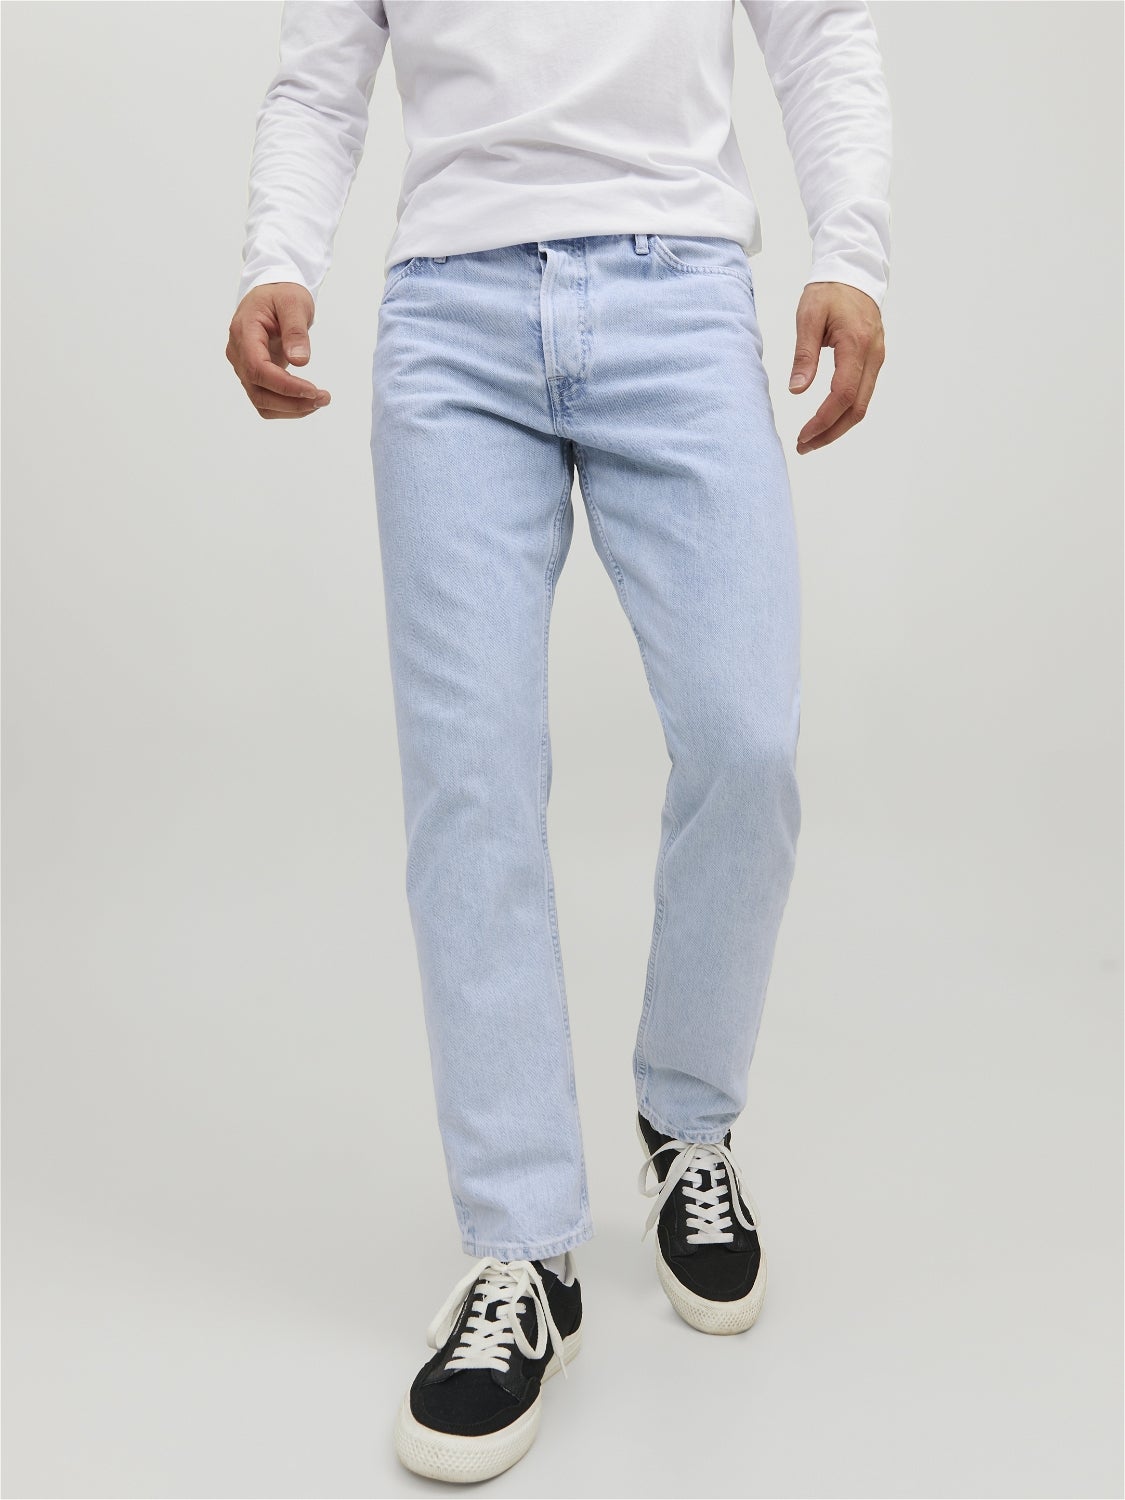 discount 57% White MEN FASHION Jeans Basic Jack & Jones straight jeans 